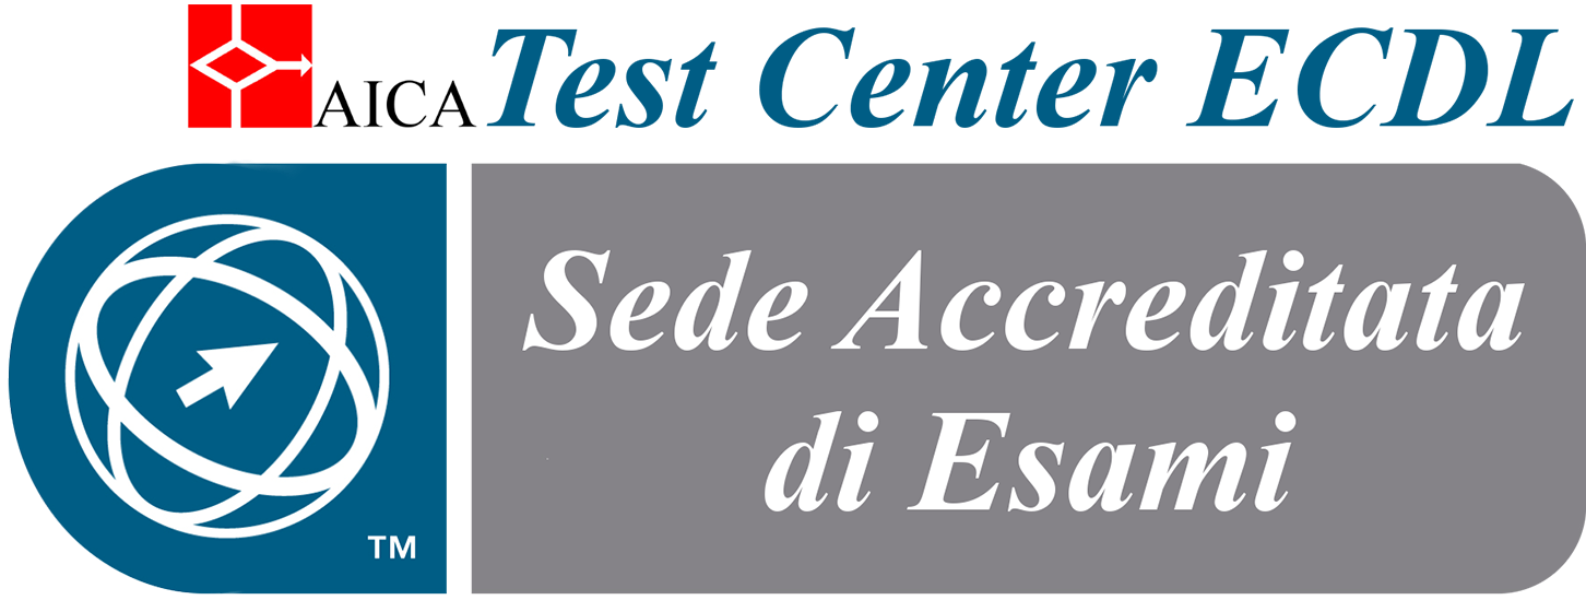 Test Center ECDL